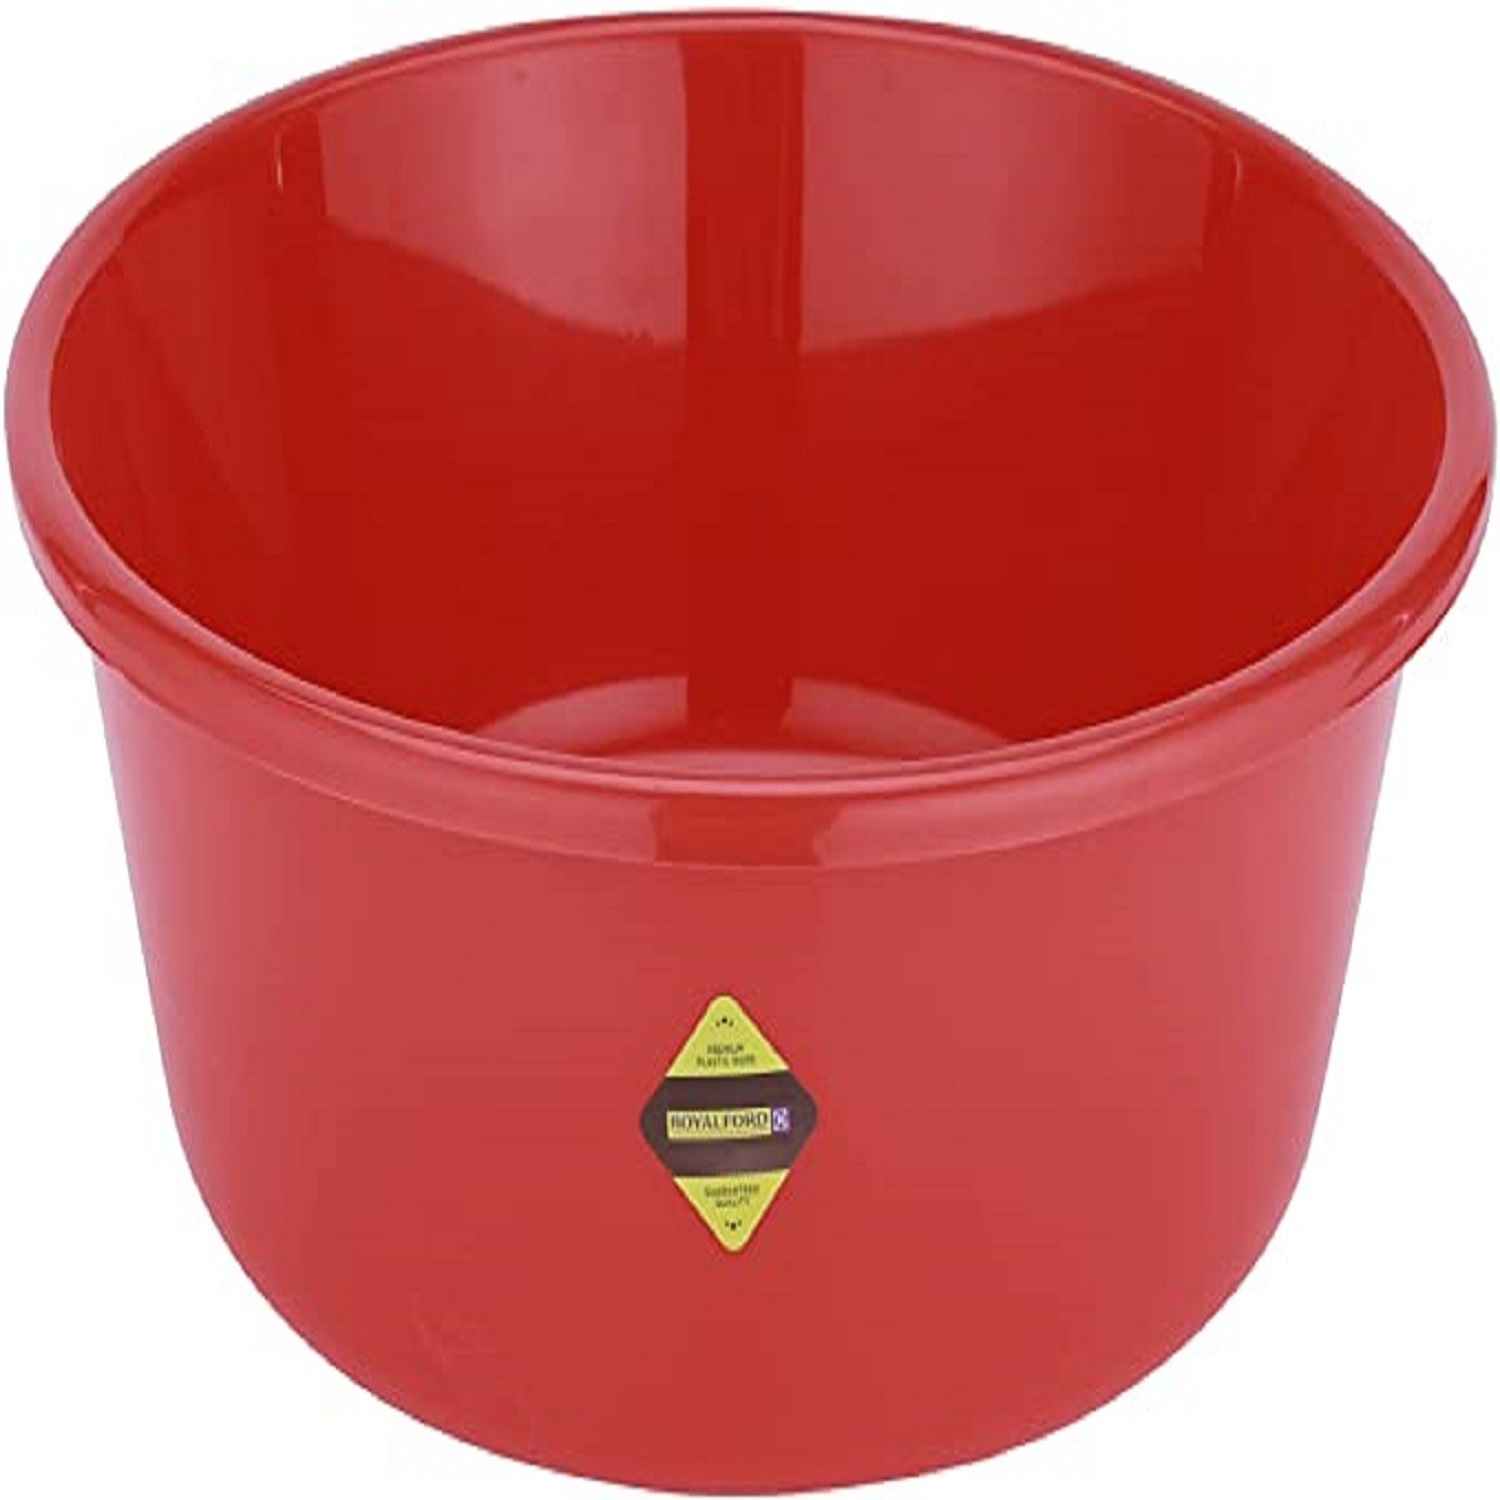 Royalford Rolled Rim Wash Tub - Plastic - Red - 9 LITER